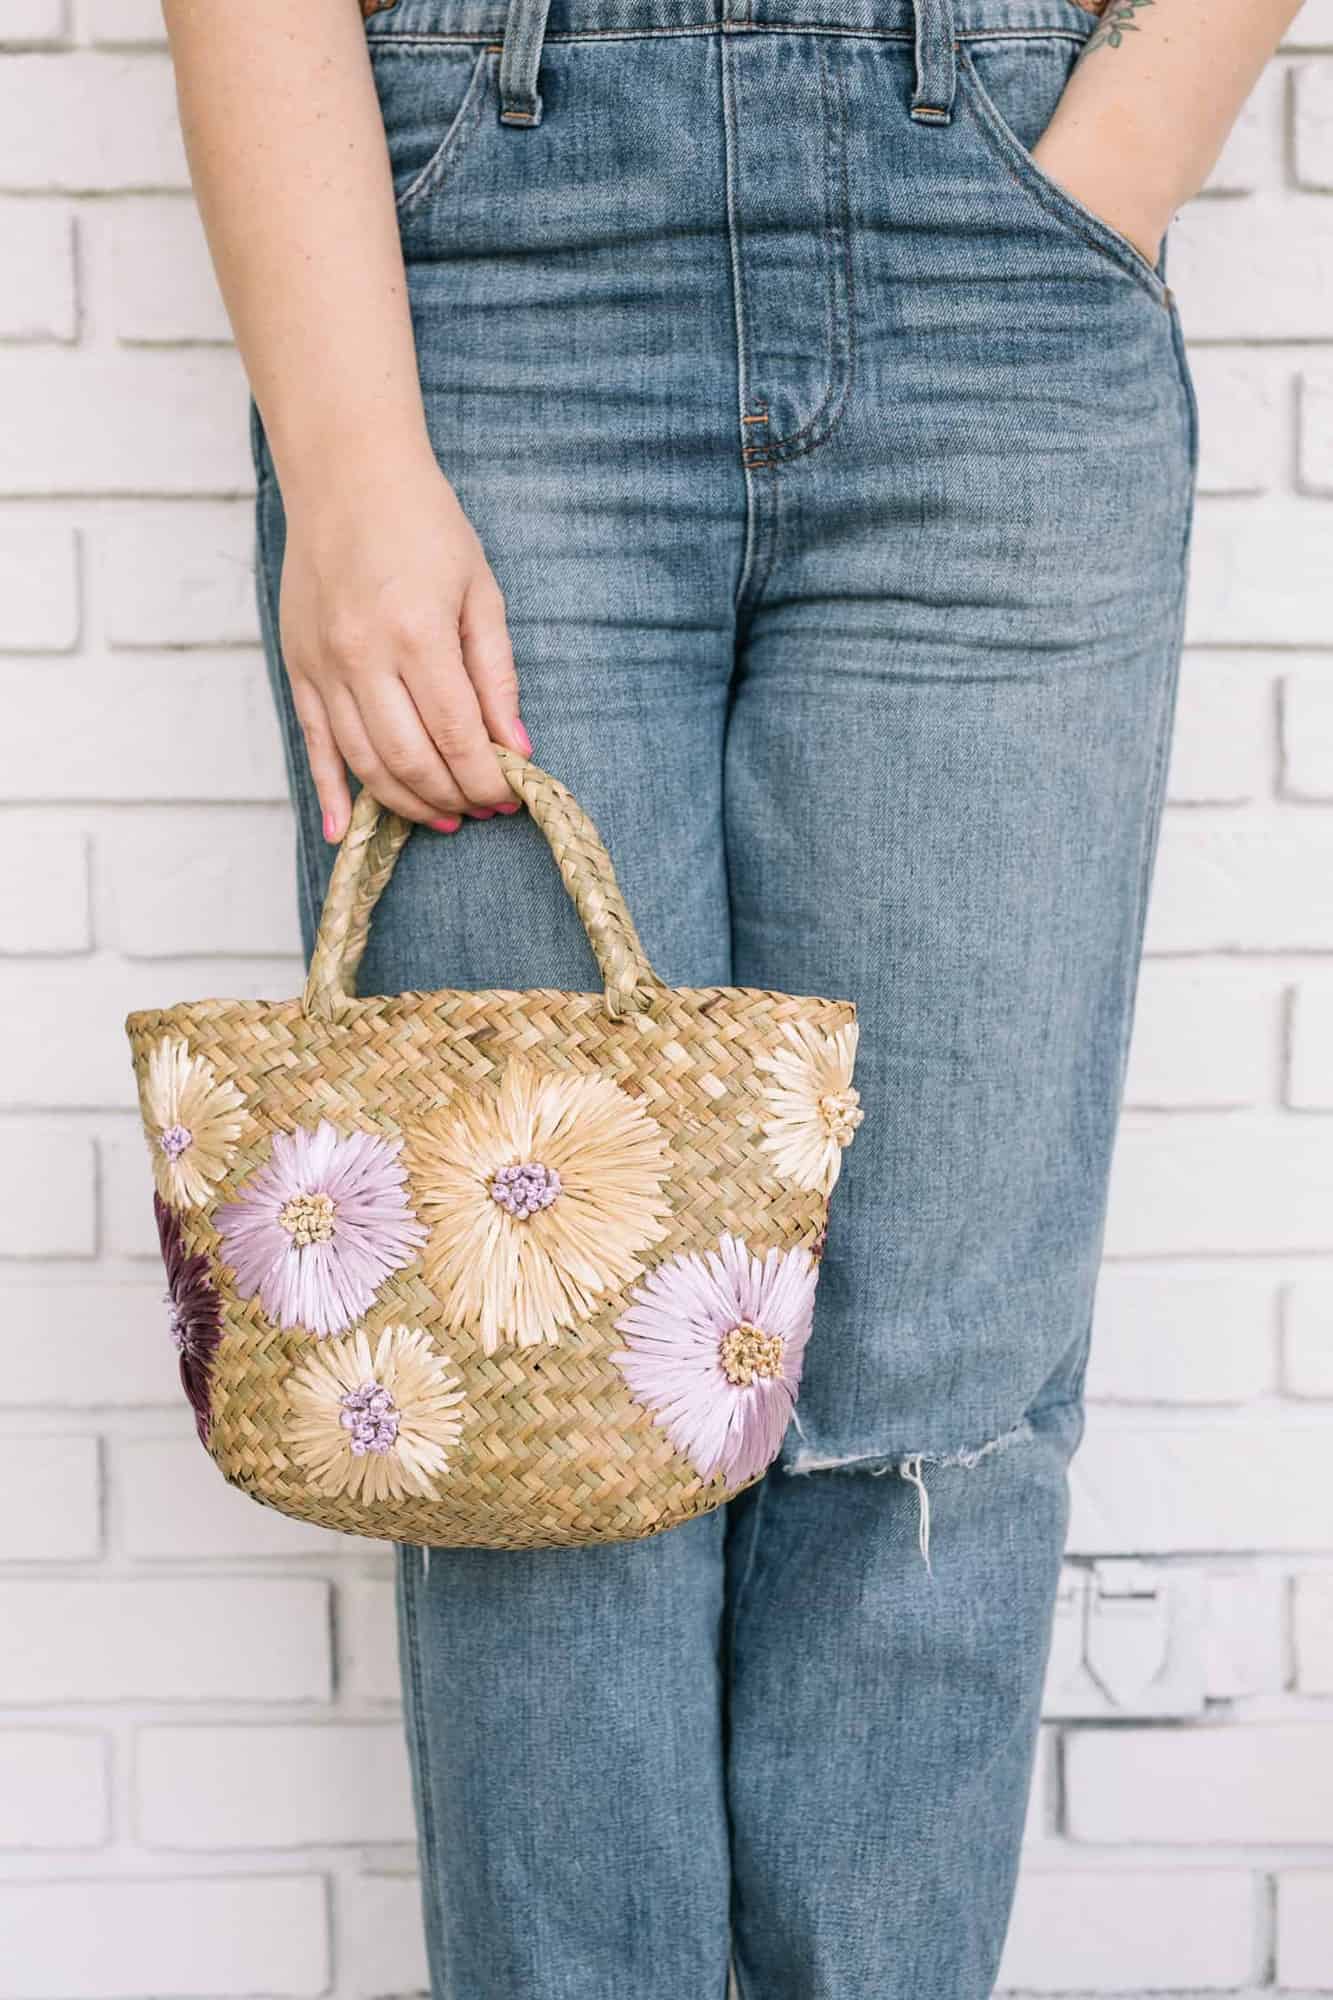 DIY stitched floral purse